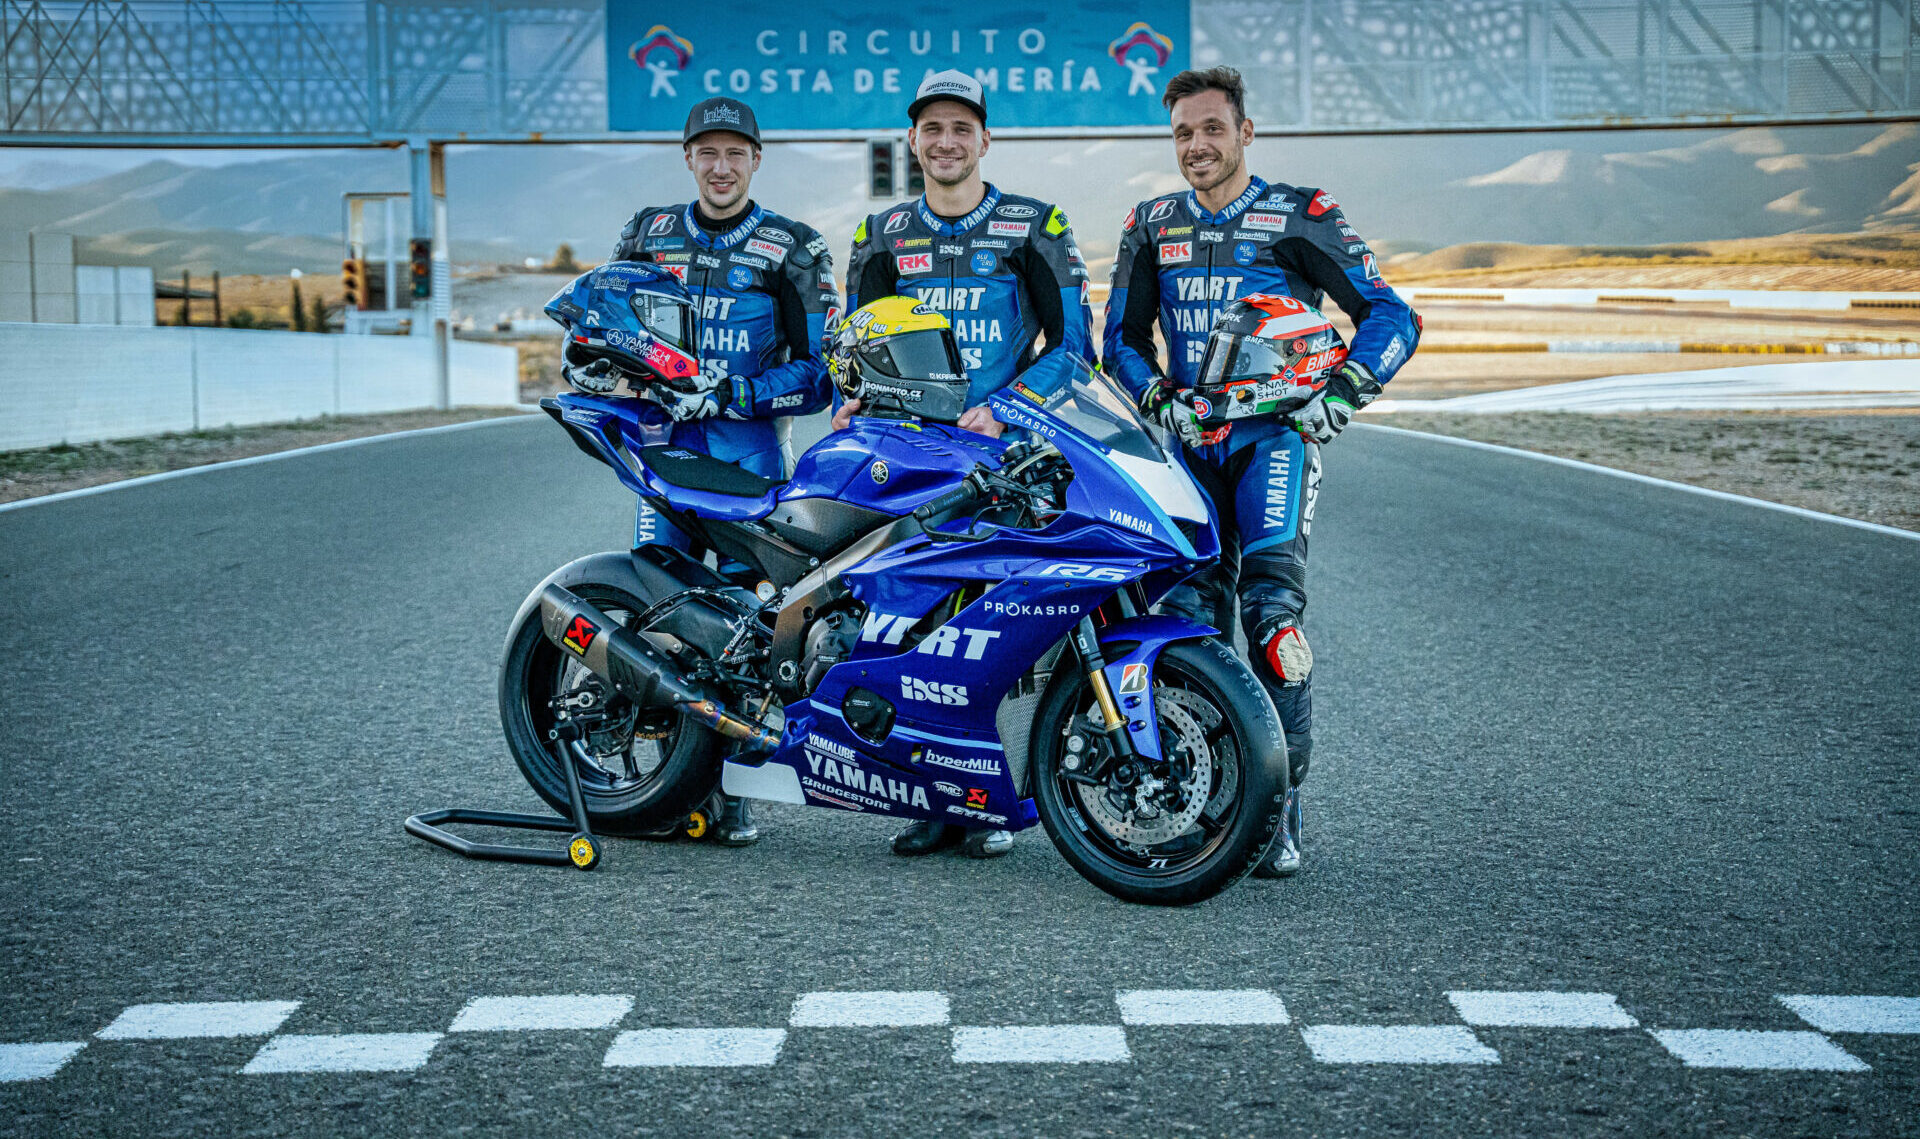 YART Yamaha riders Marvin Fritz (left), Karel Hanika (center), and Niccolo Canepa (right). Photo courtesy YART Yamaha.